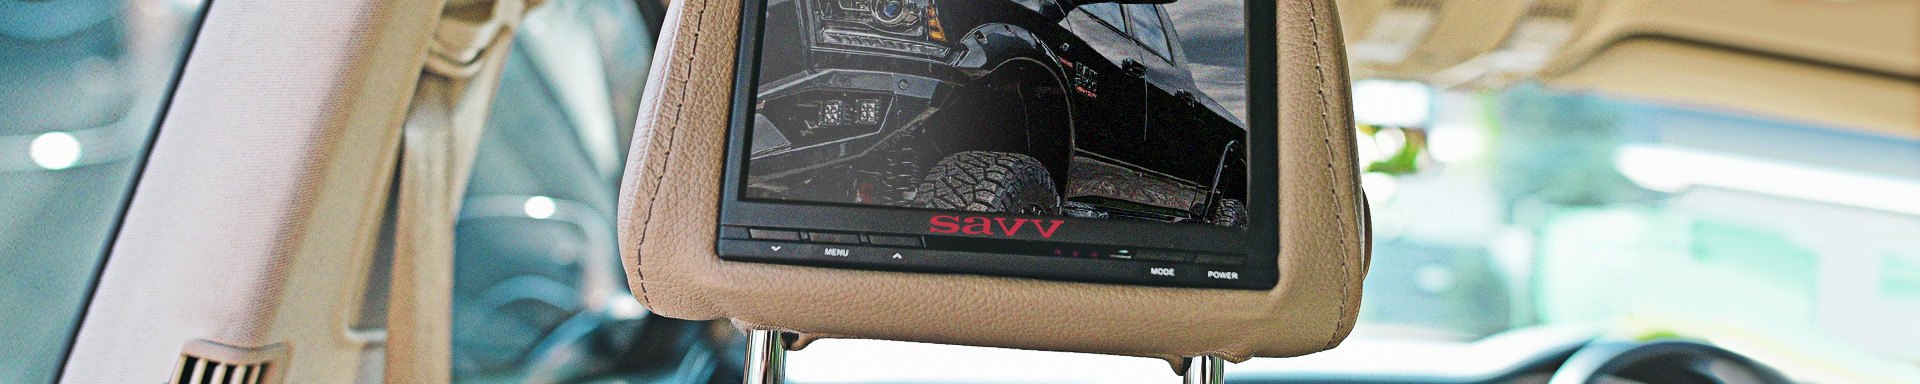 SAVV Cameras & Driver Safety